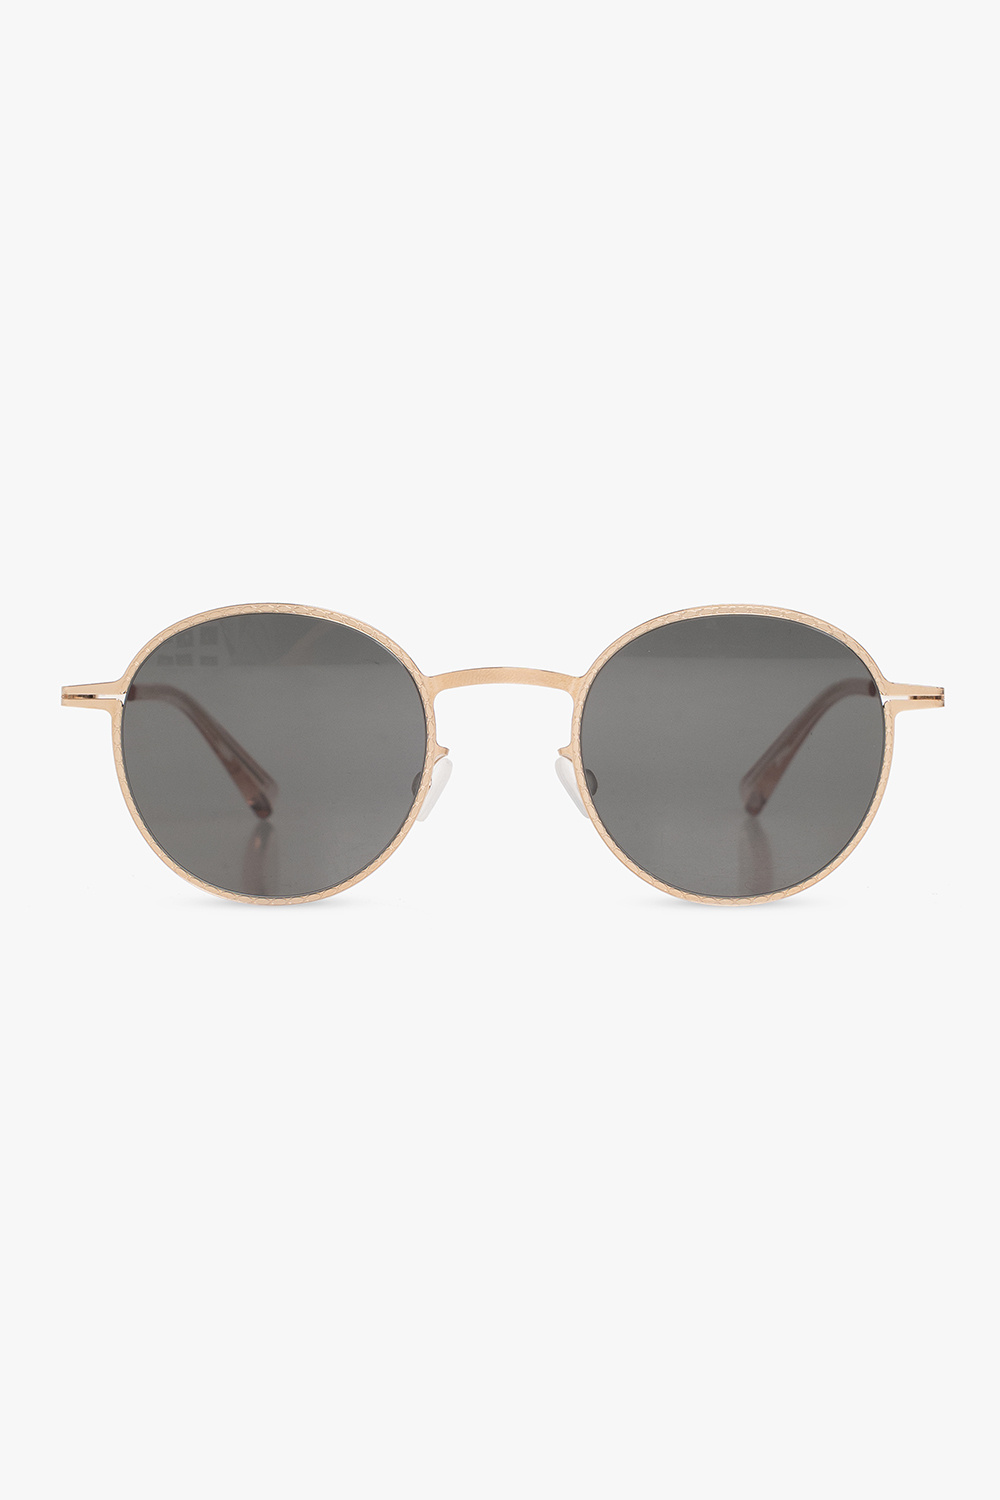 Mykita ‘Nis’ Harrison sunglasses